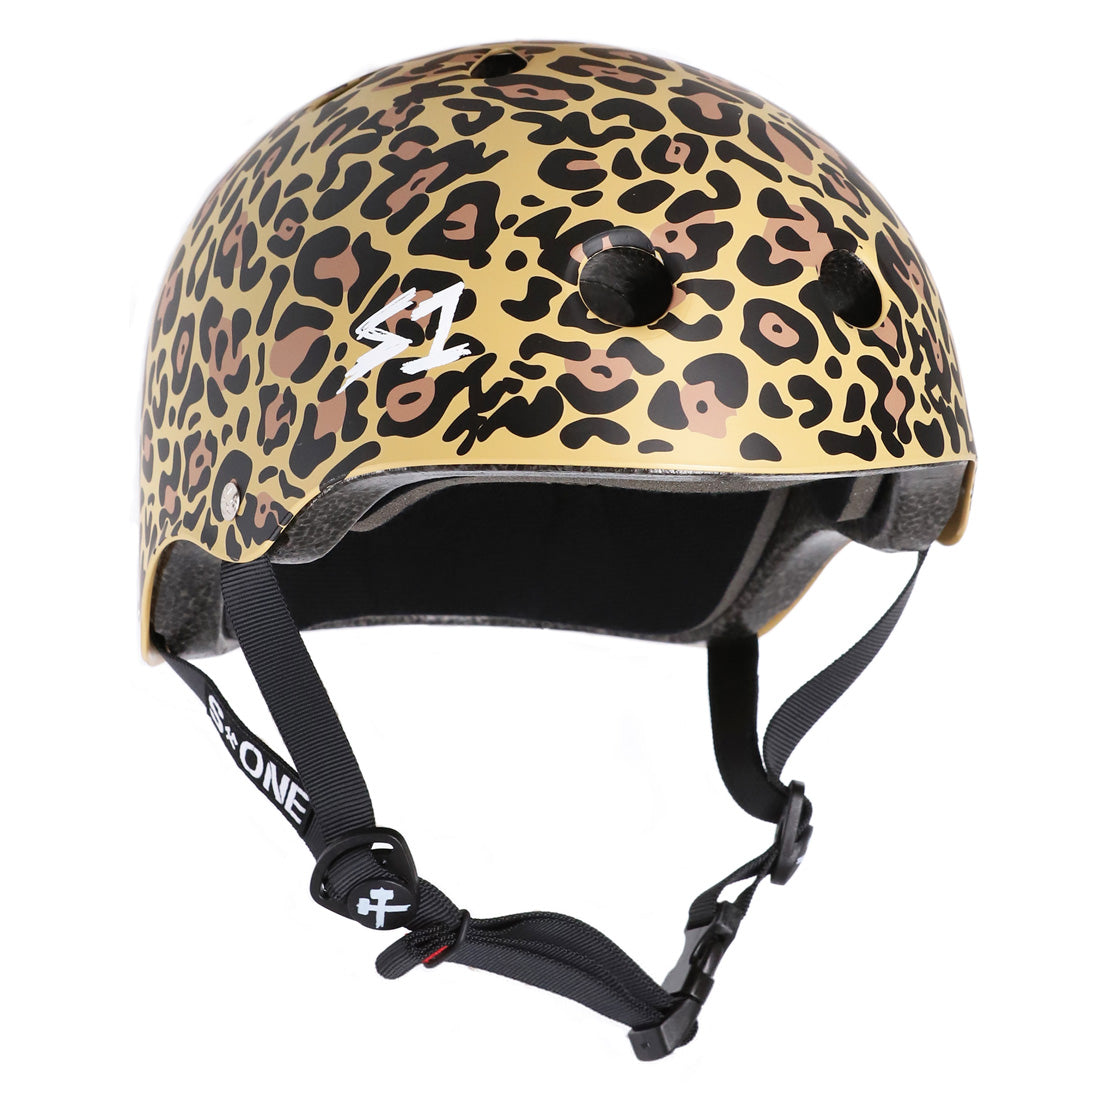 S-One Lifer Helmet - Leopard Matte Helmets